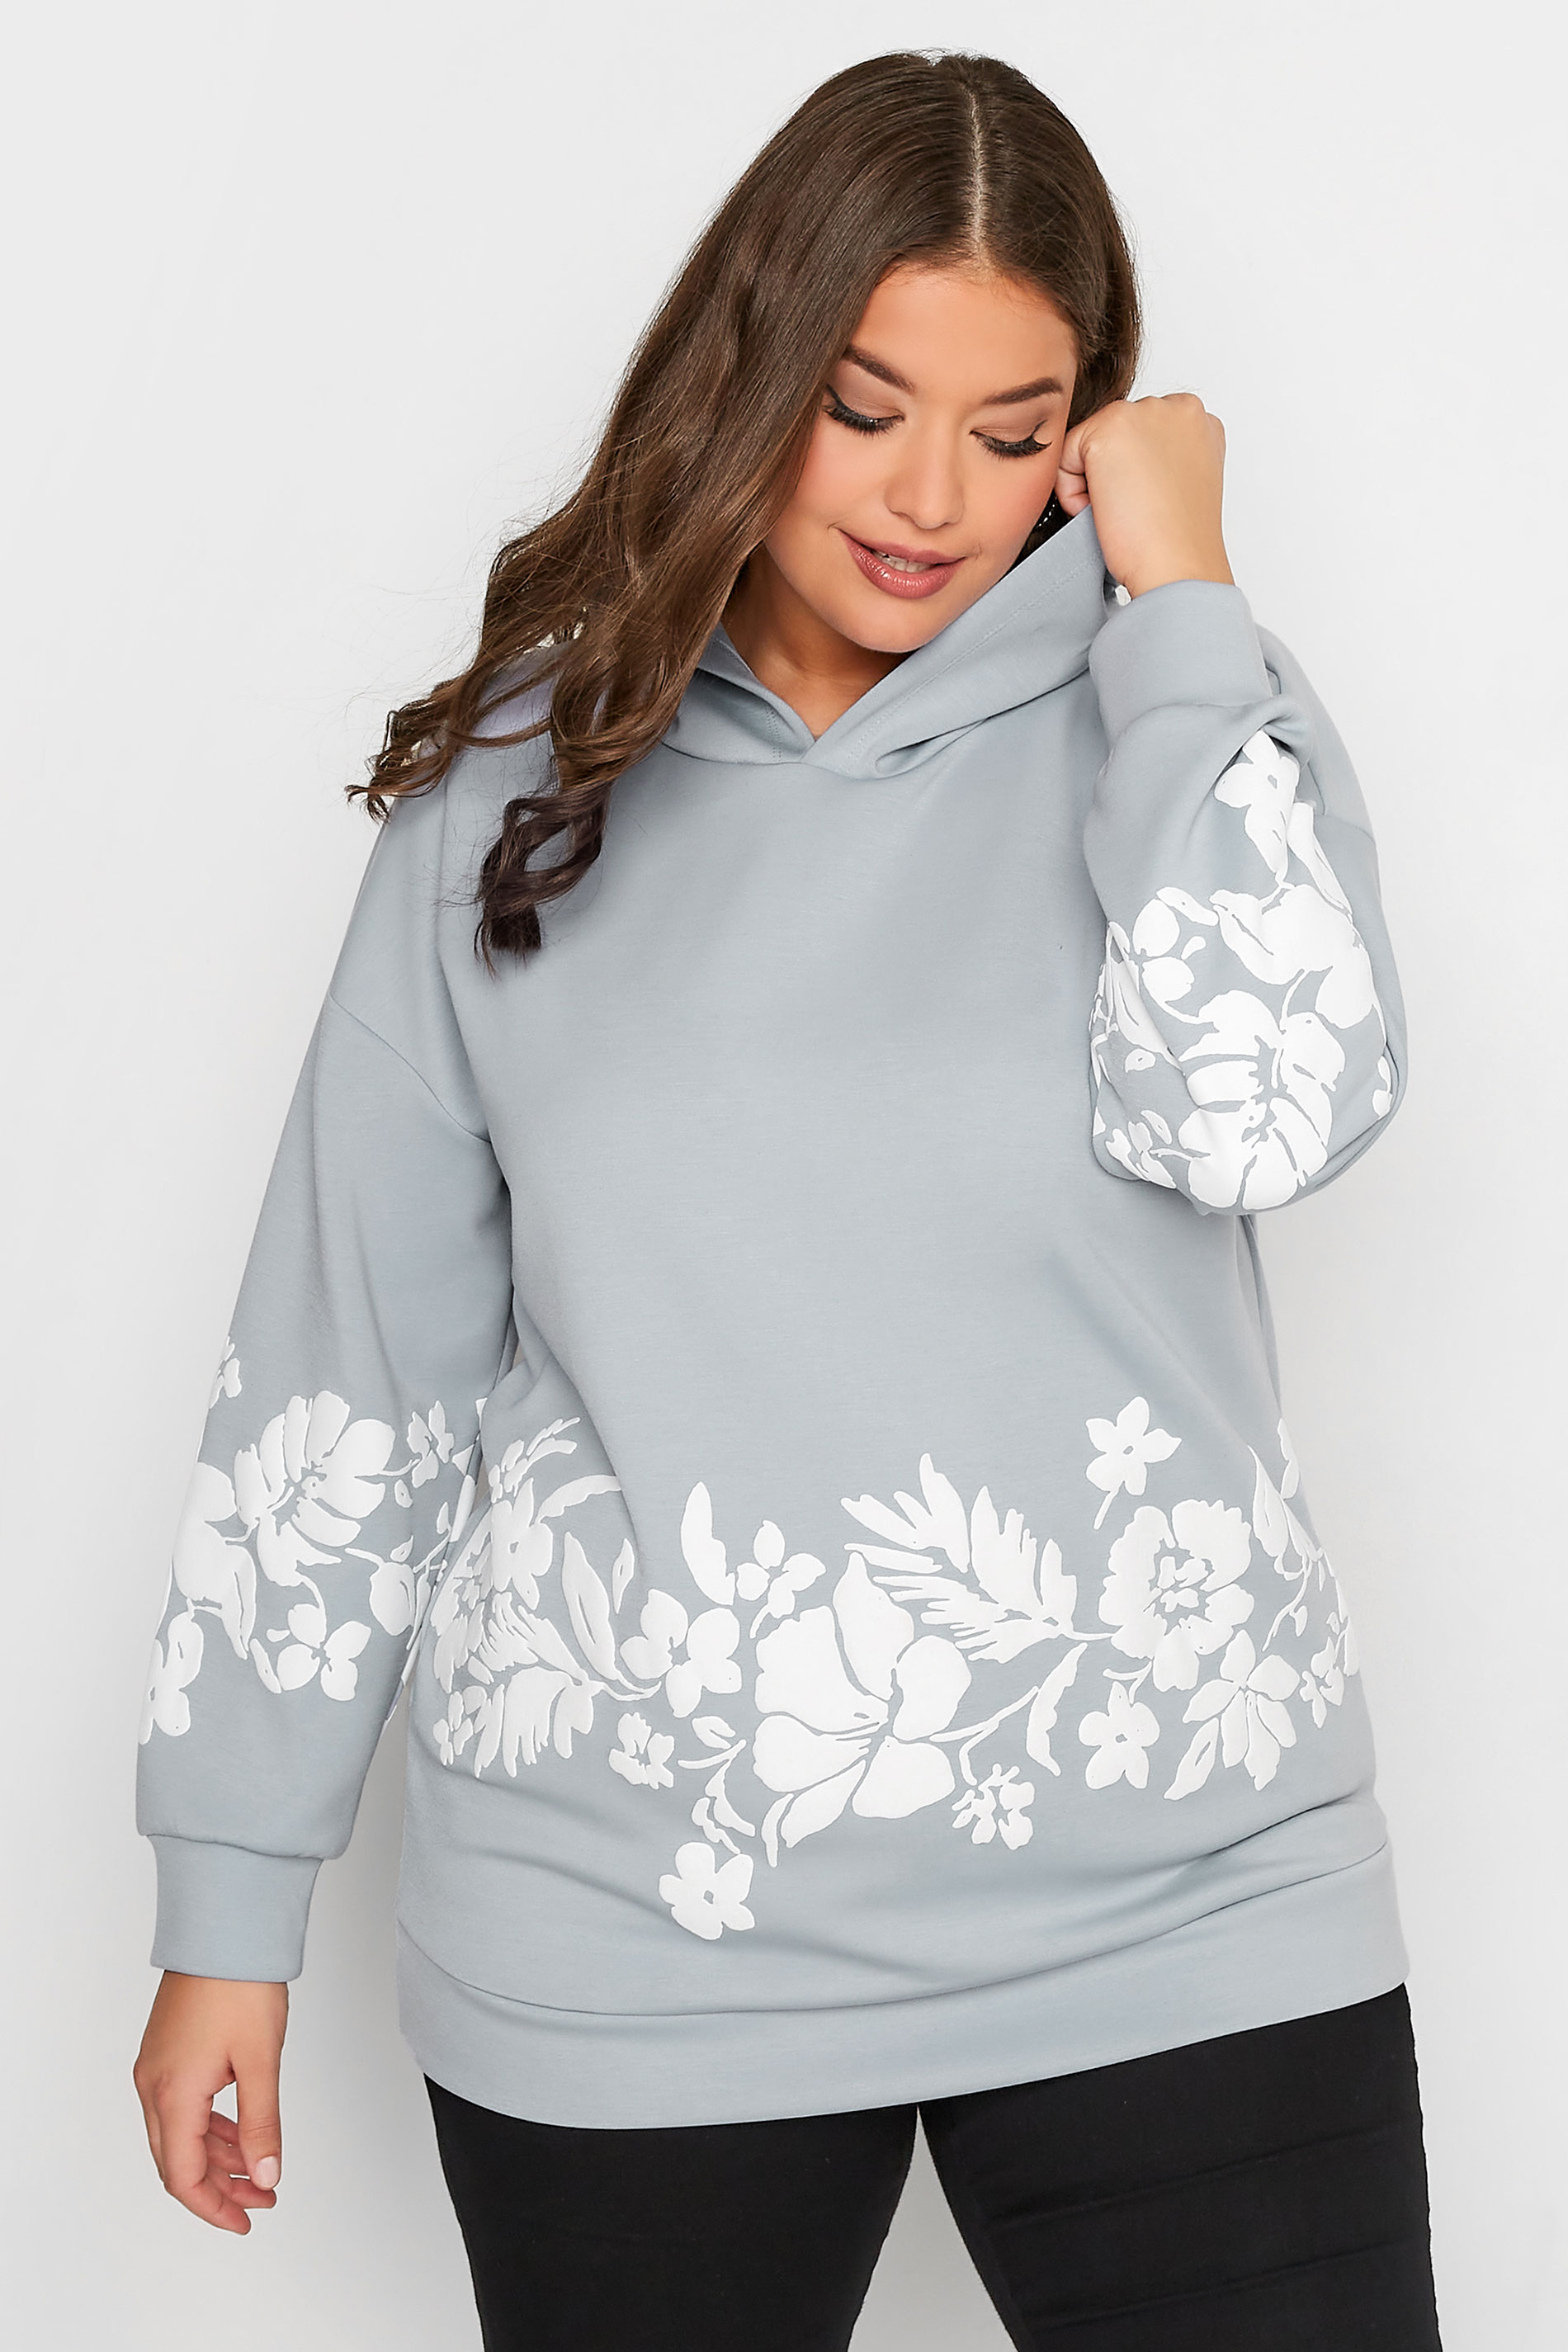 Women's Oversize floral hoodie I